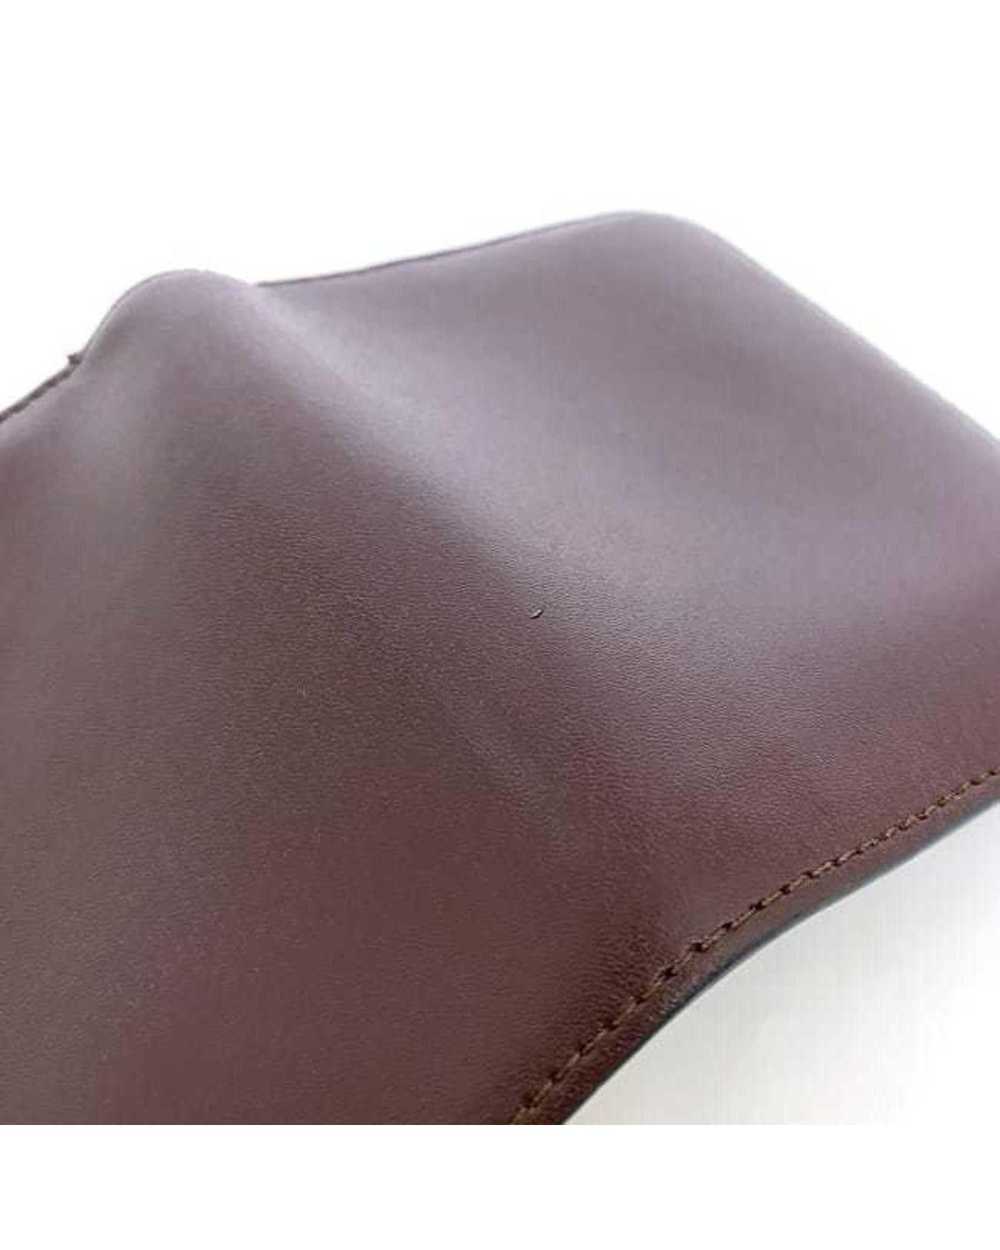 Fendi Burgundy Leather Compact Wallet - image 6